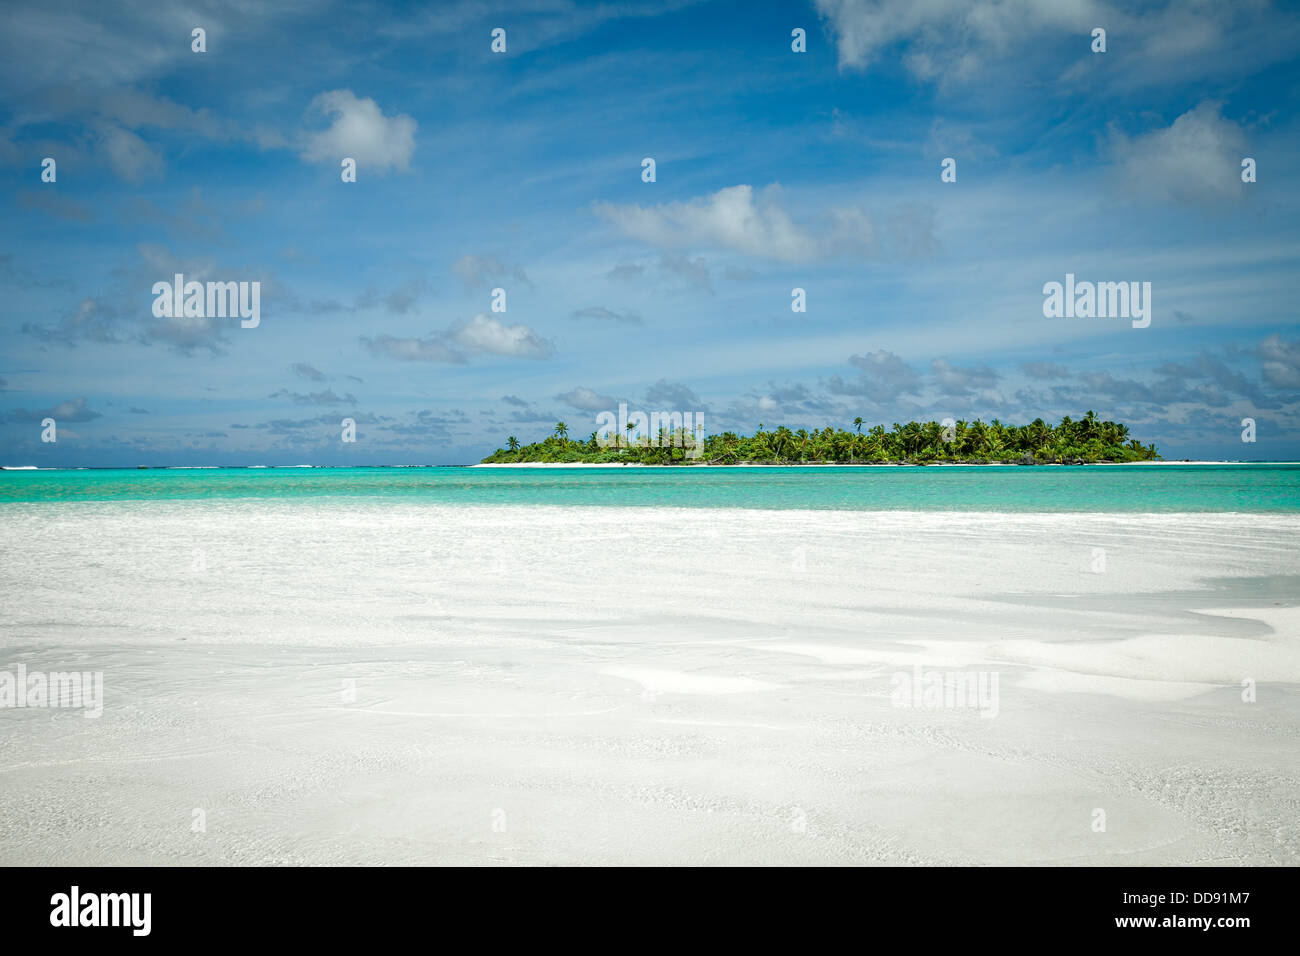 Maina atoll as seen from the white sandy beach of the desert Honeymoon Island, Aitutaki Lagoon - Cook Islands South Pacific Stock Photo